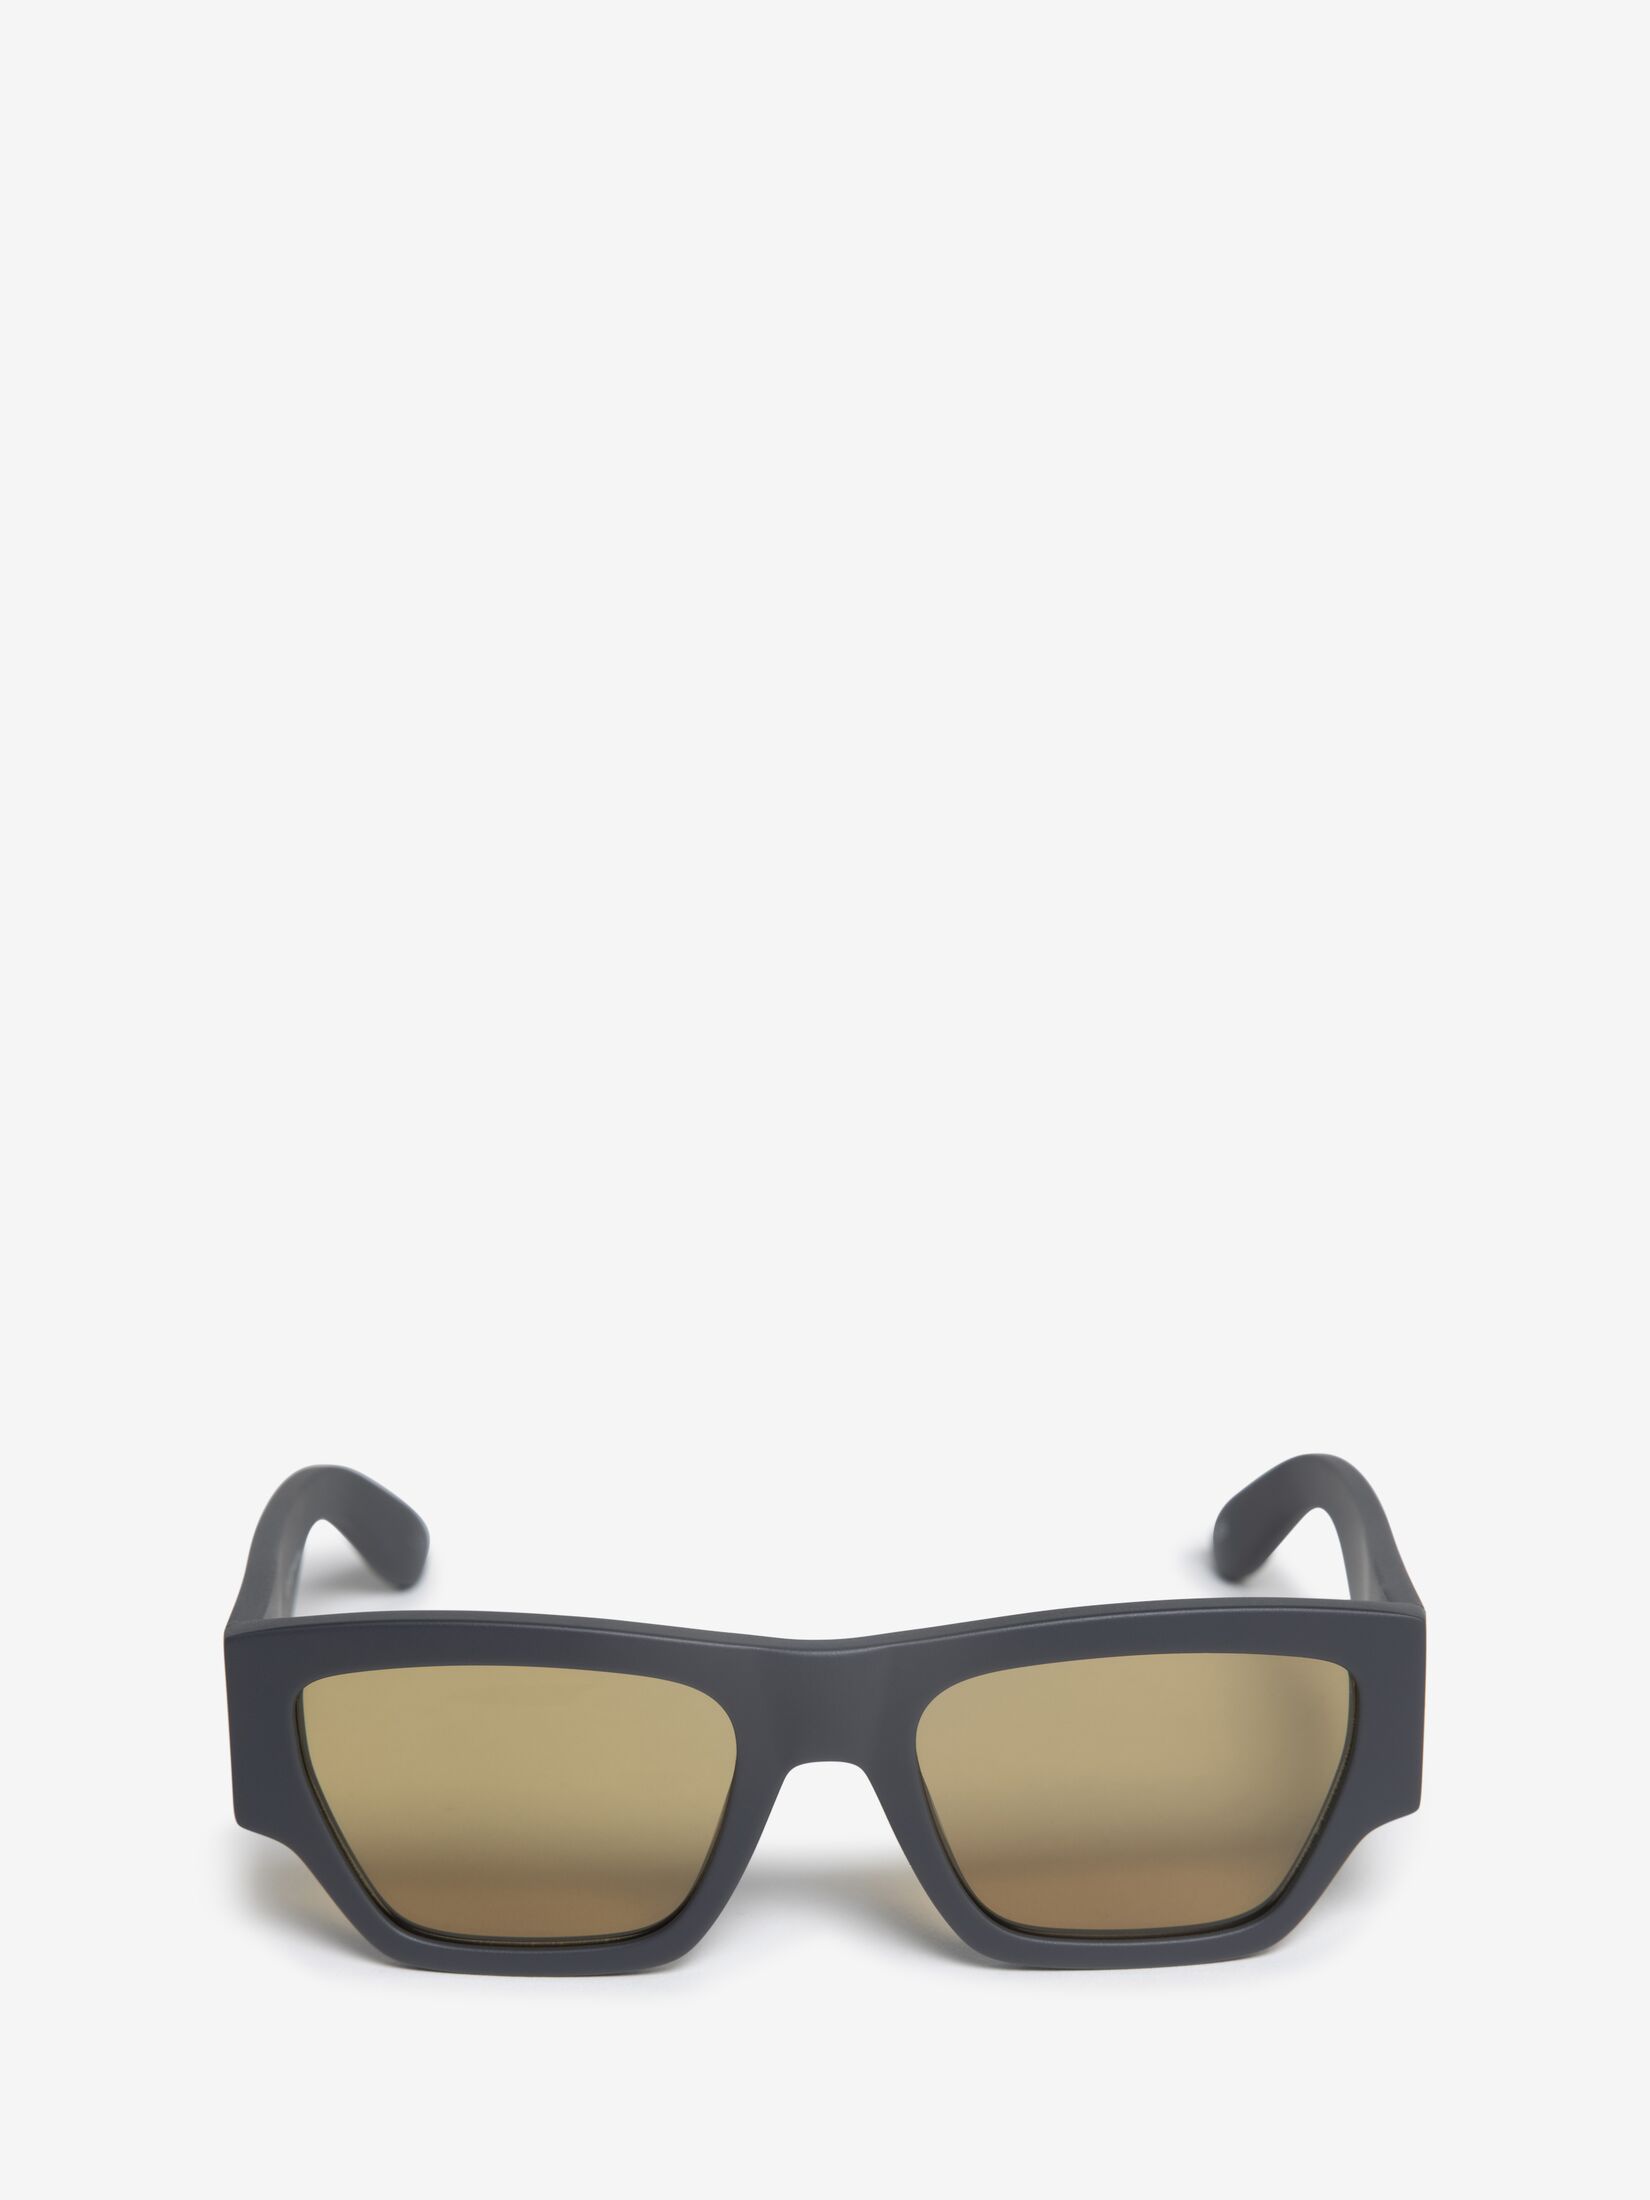 Abgewinkelte rechteckige McQueen Sonnenbrille